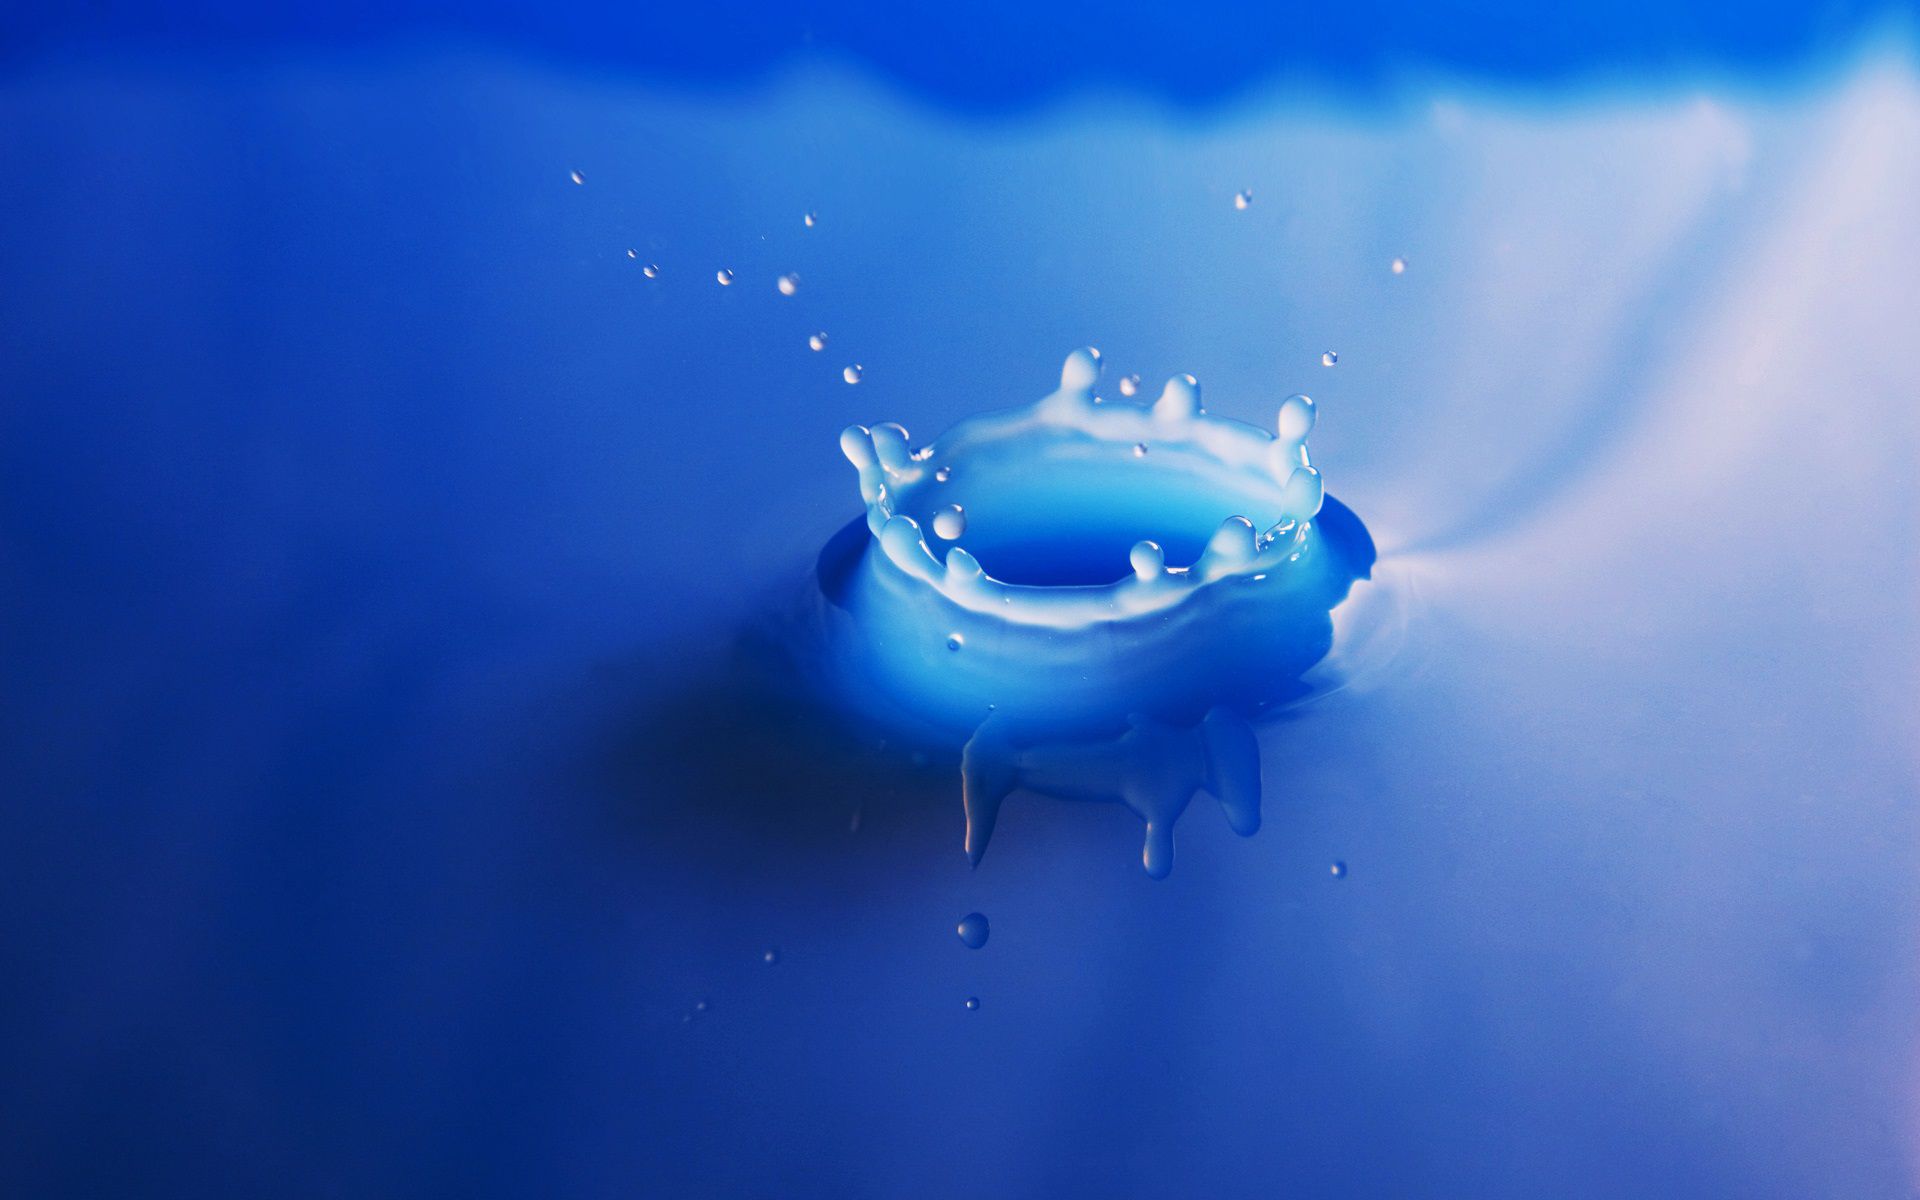 3 cool water drops hd wallpaper,blue,water,drop,liquid,water resources